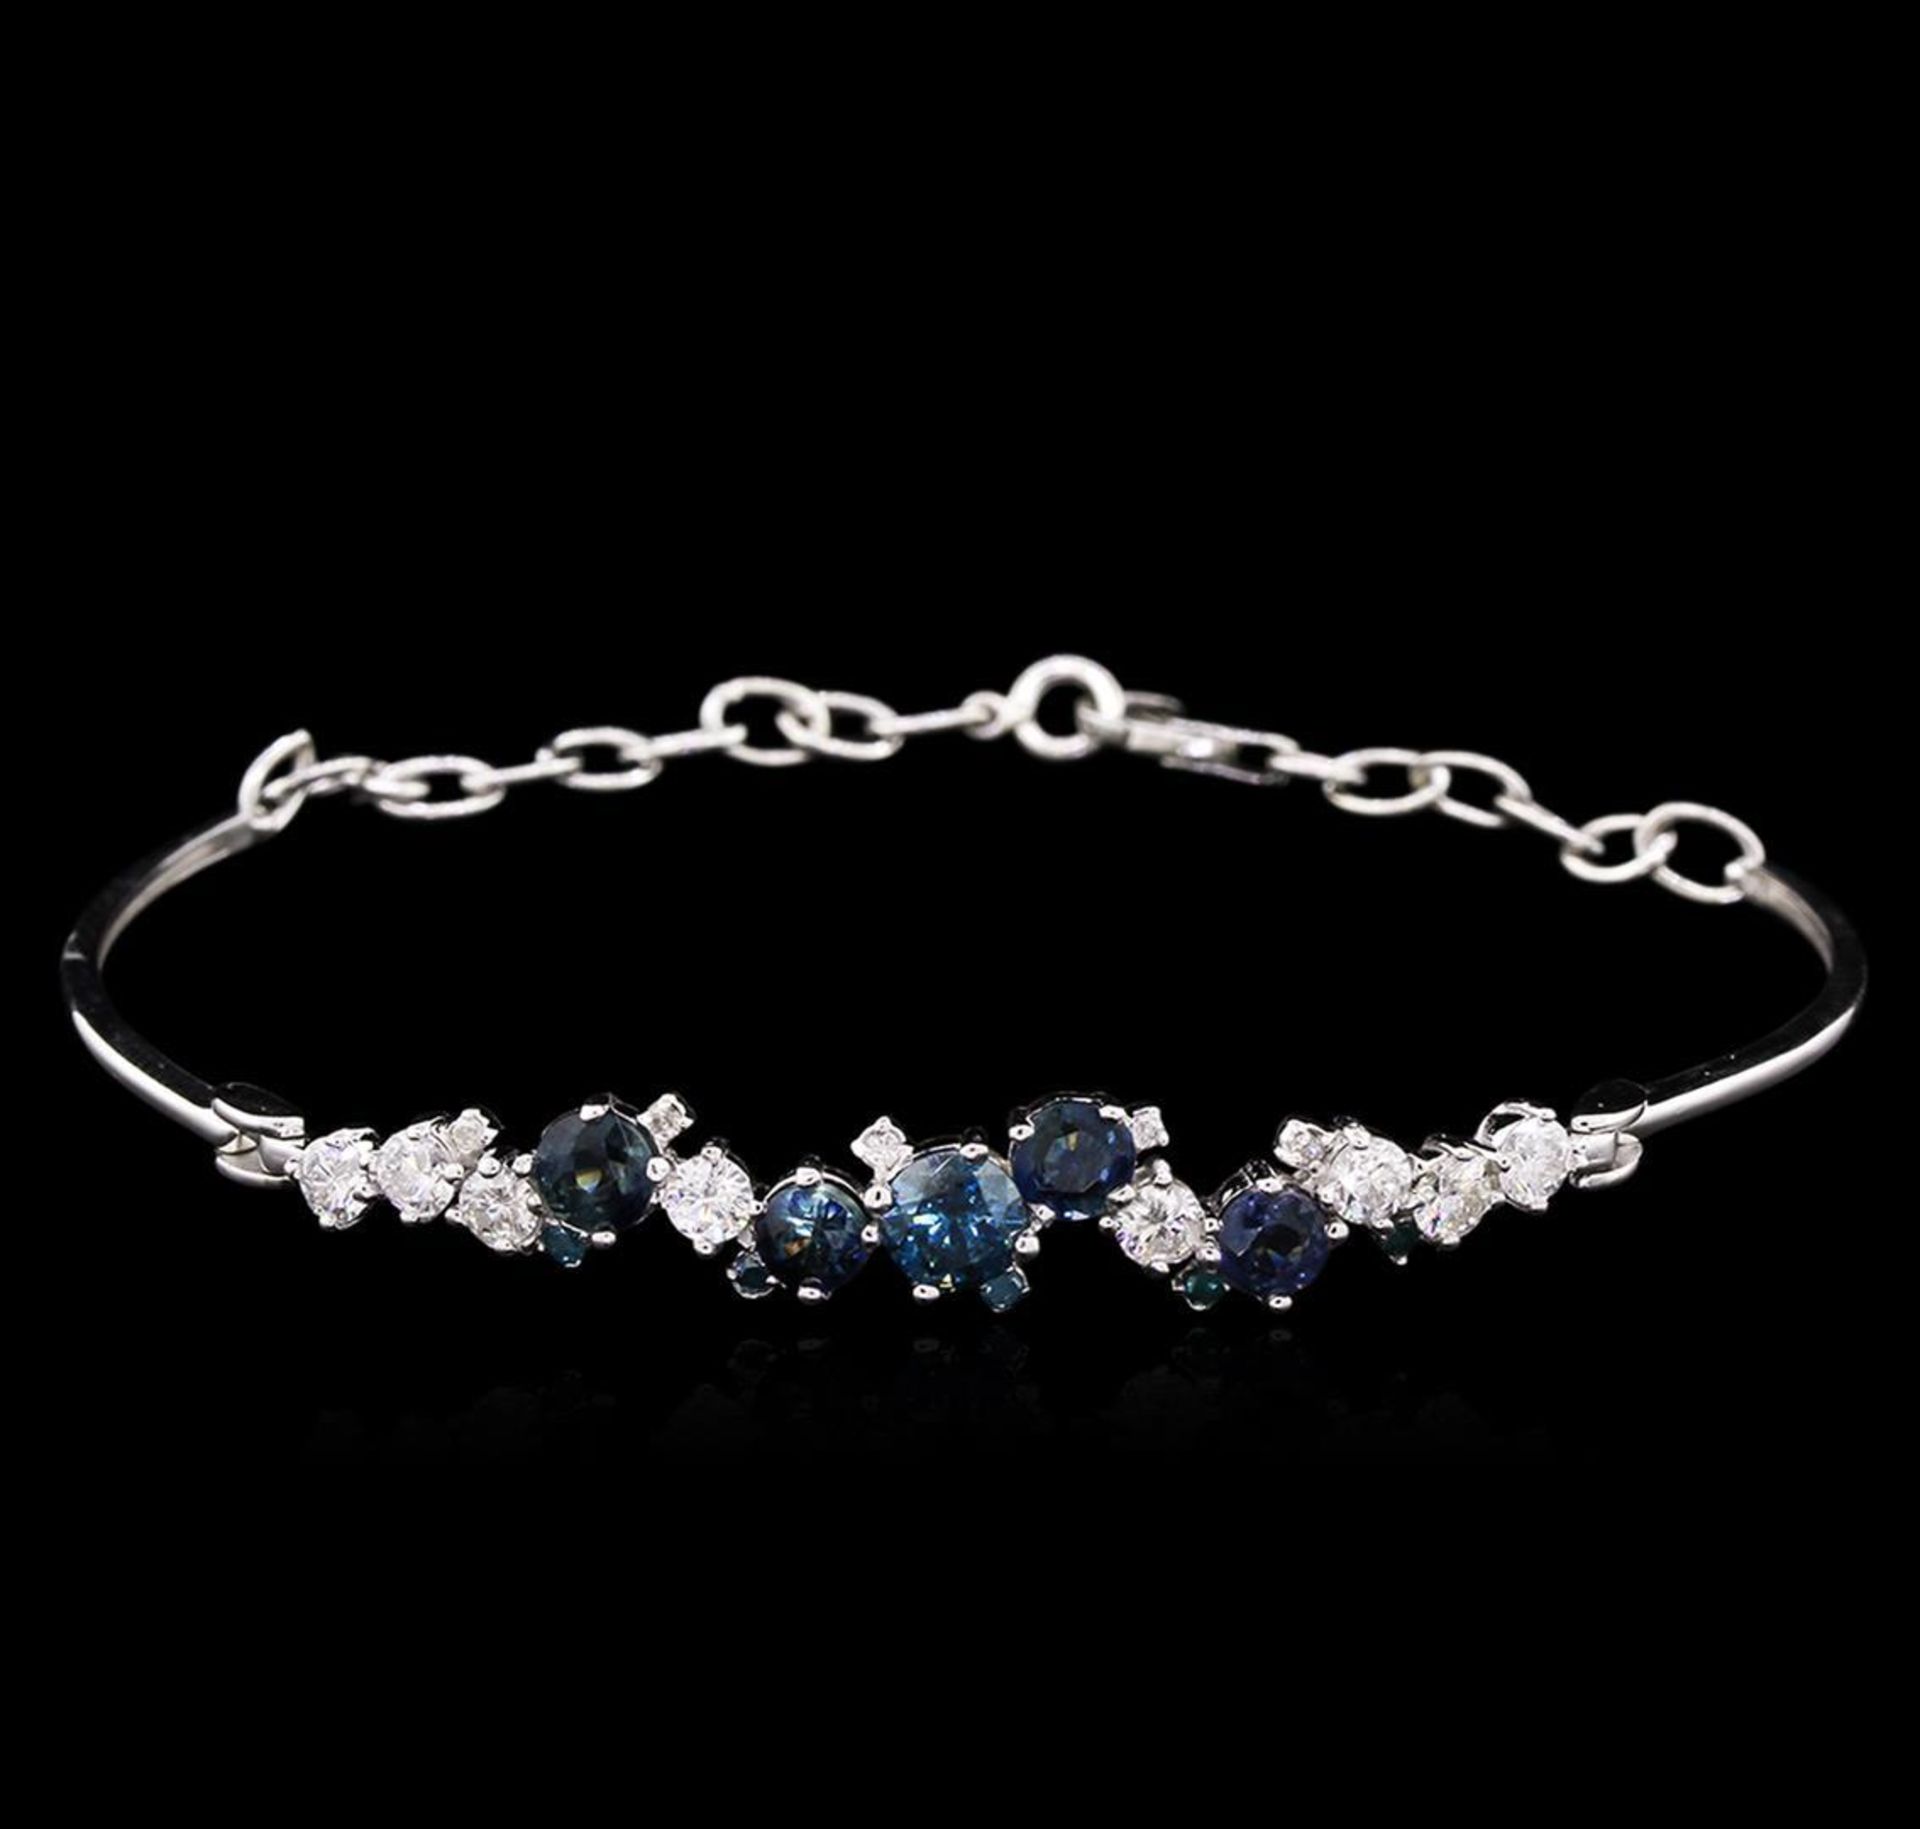 1.48 ctw Blue Sapphire and Diamond Bracelet - 14KT White Gold - Image 2 of 10